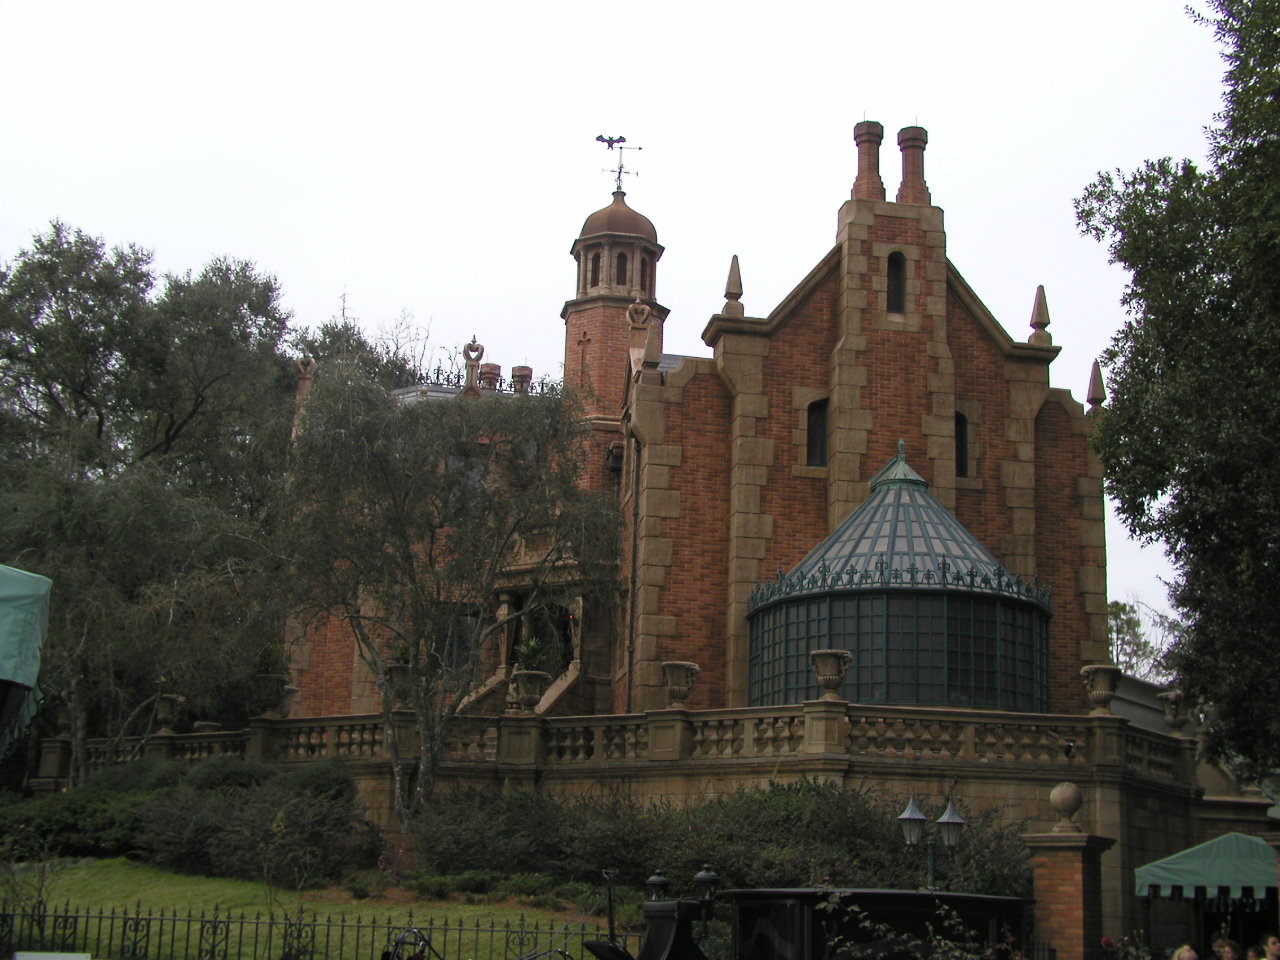 Walt Disney Haunted House Image Pictures Findpik